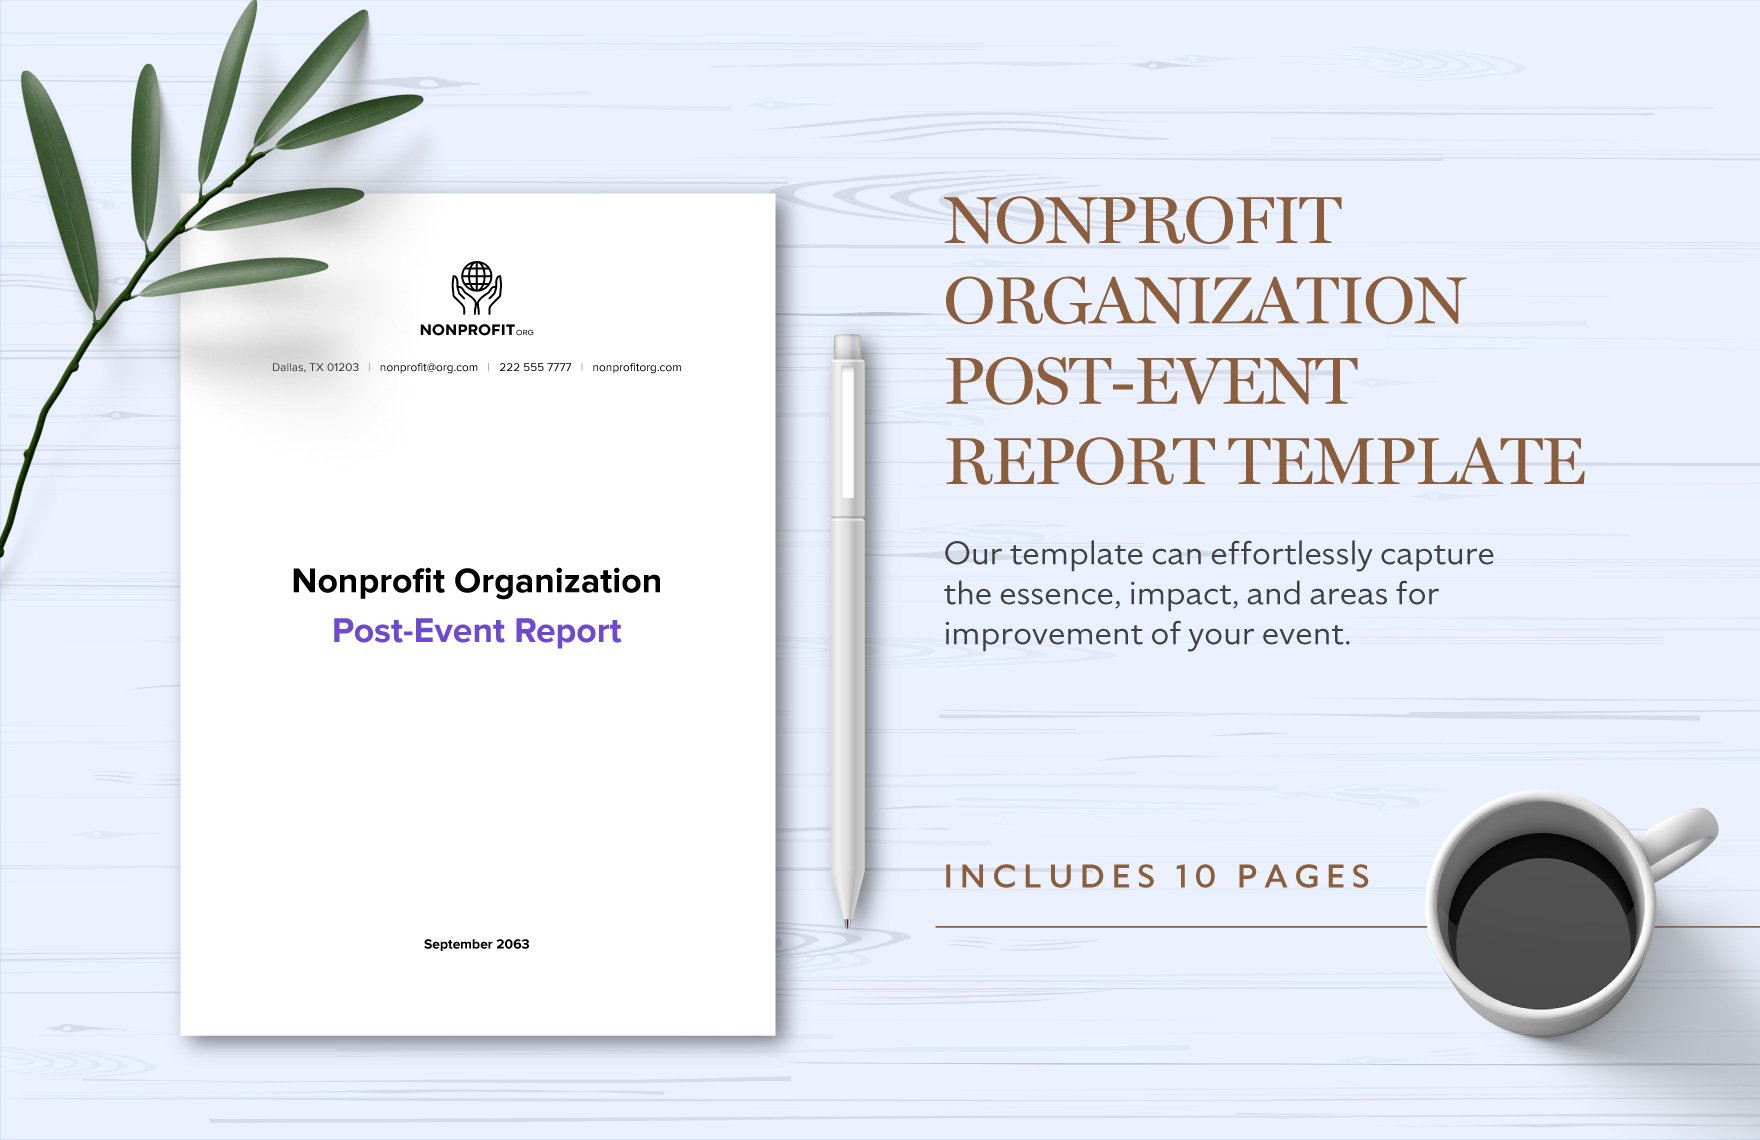 Nonprofit Organization Post-Event Report Template